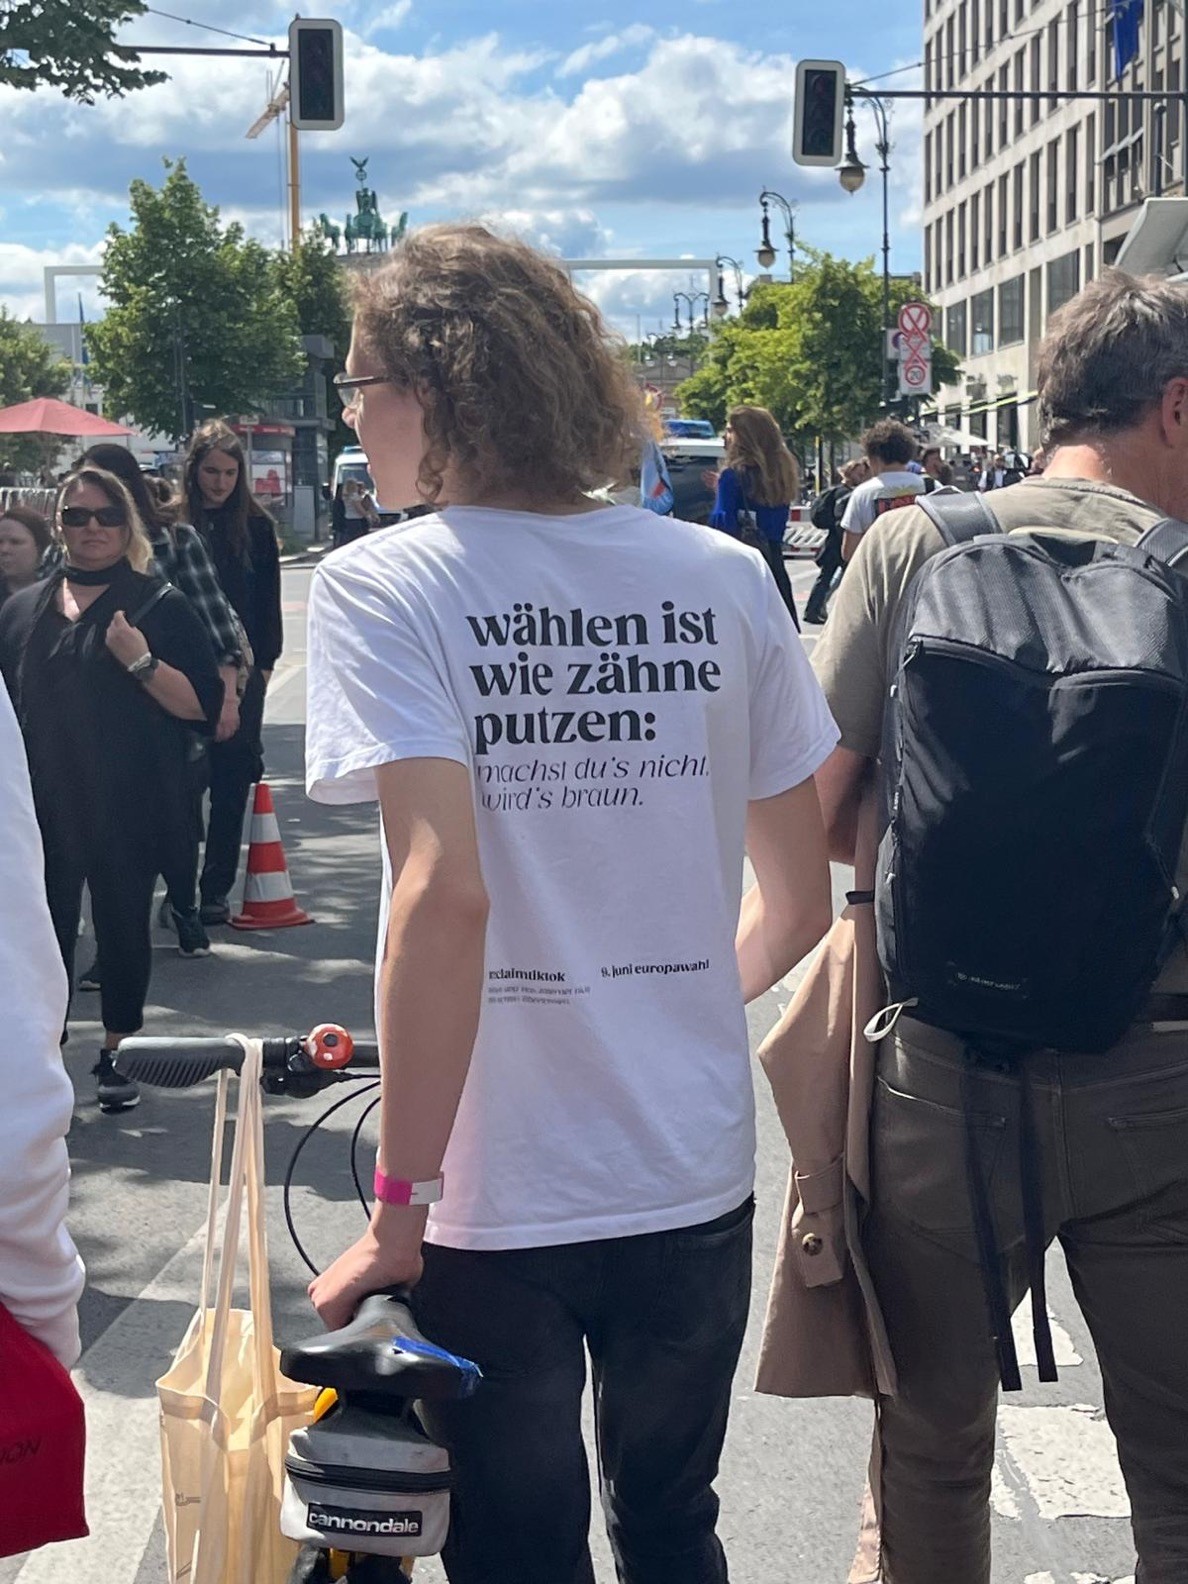 Person in a white T-shirt with German text, holding a bicycle and walking in a crowd on a city street. (Stemmen is als tandenpoetsen: doe je het niet dan wordt het bruin.)